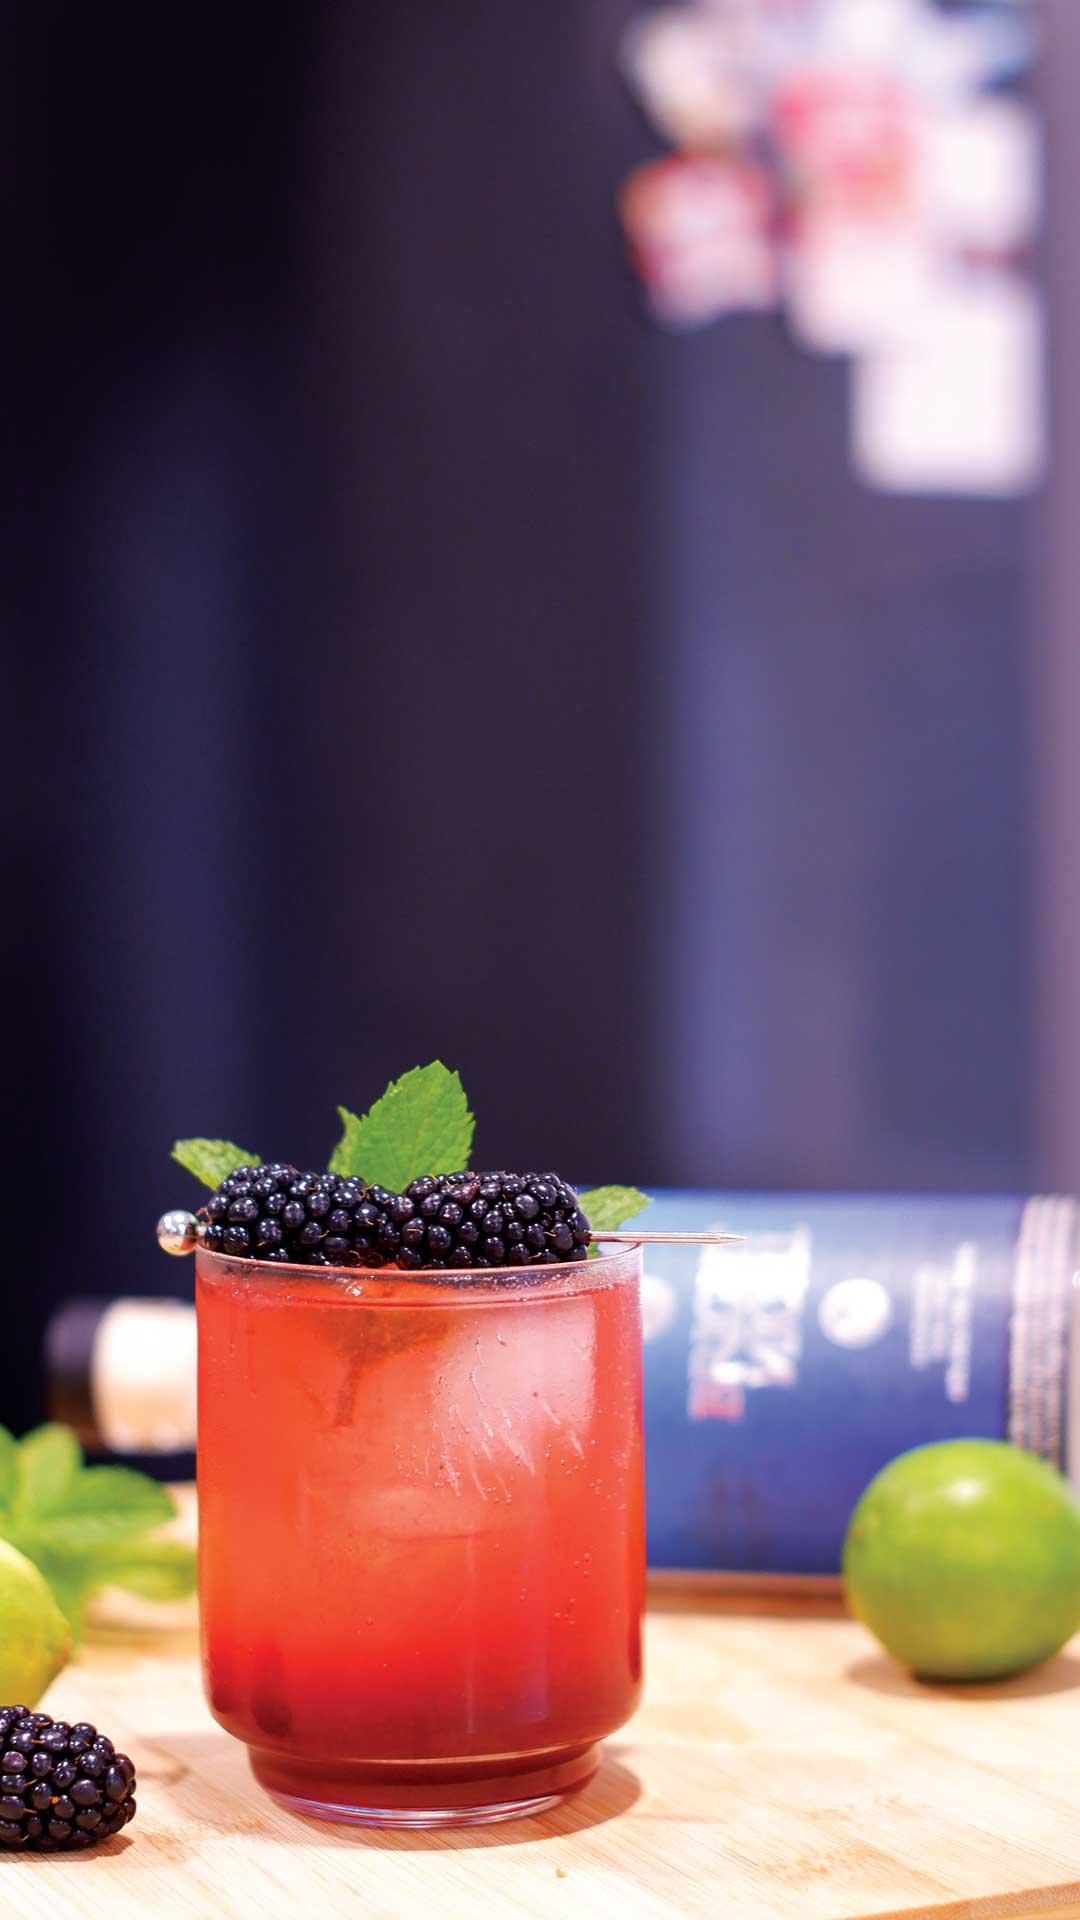 Blackberry mint smash gin cocktail